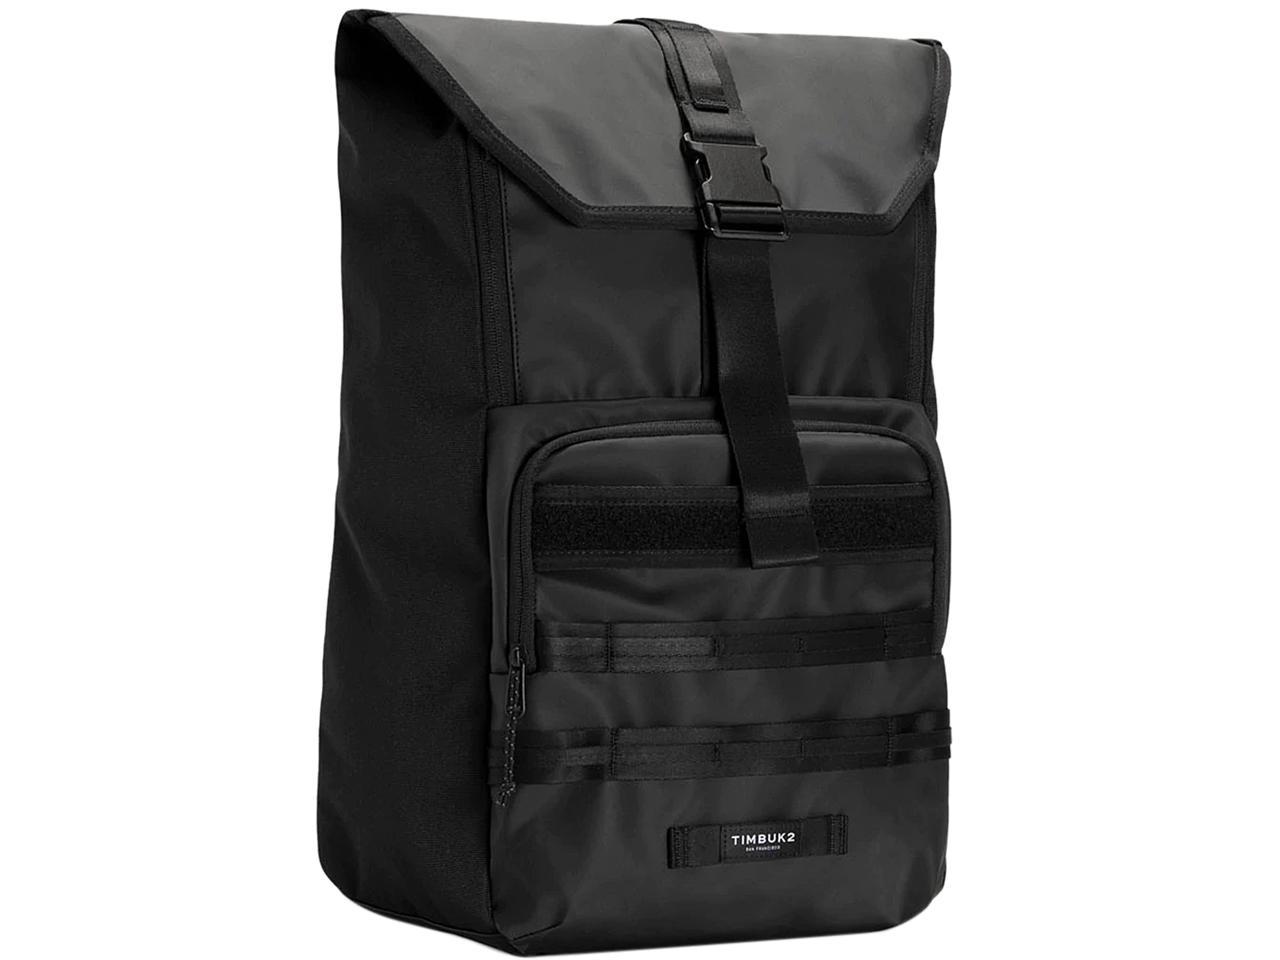 Timbuk2 Jet Black Spire Laptop Backpack 2.0 Model 1006-3-6114 - Newegg.com